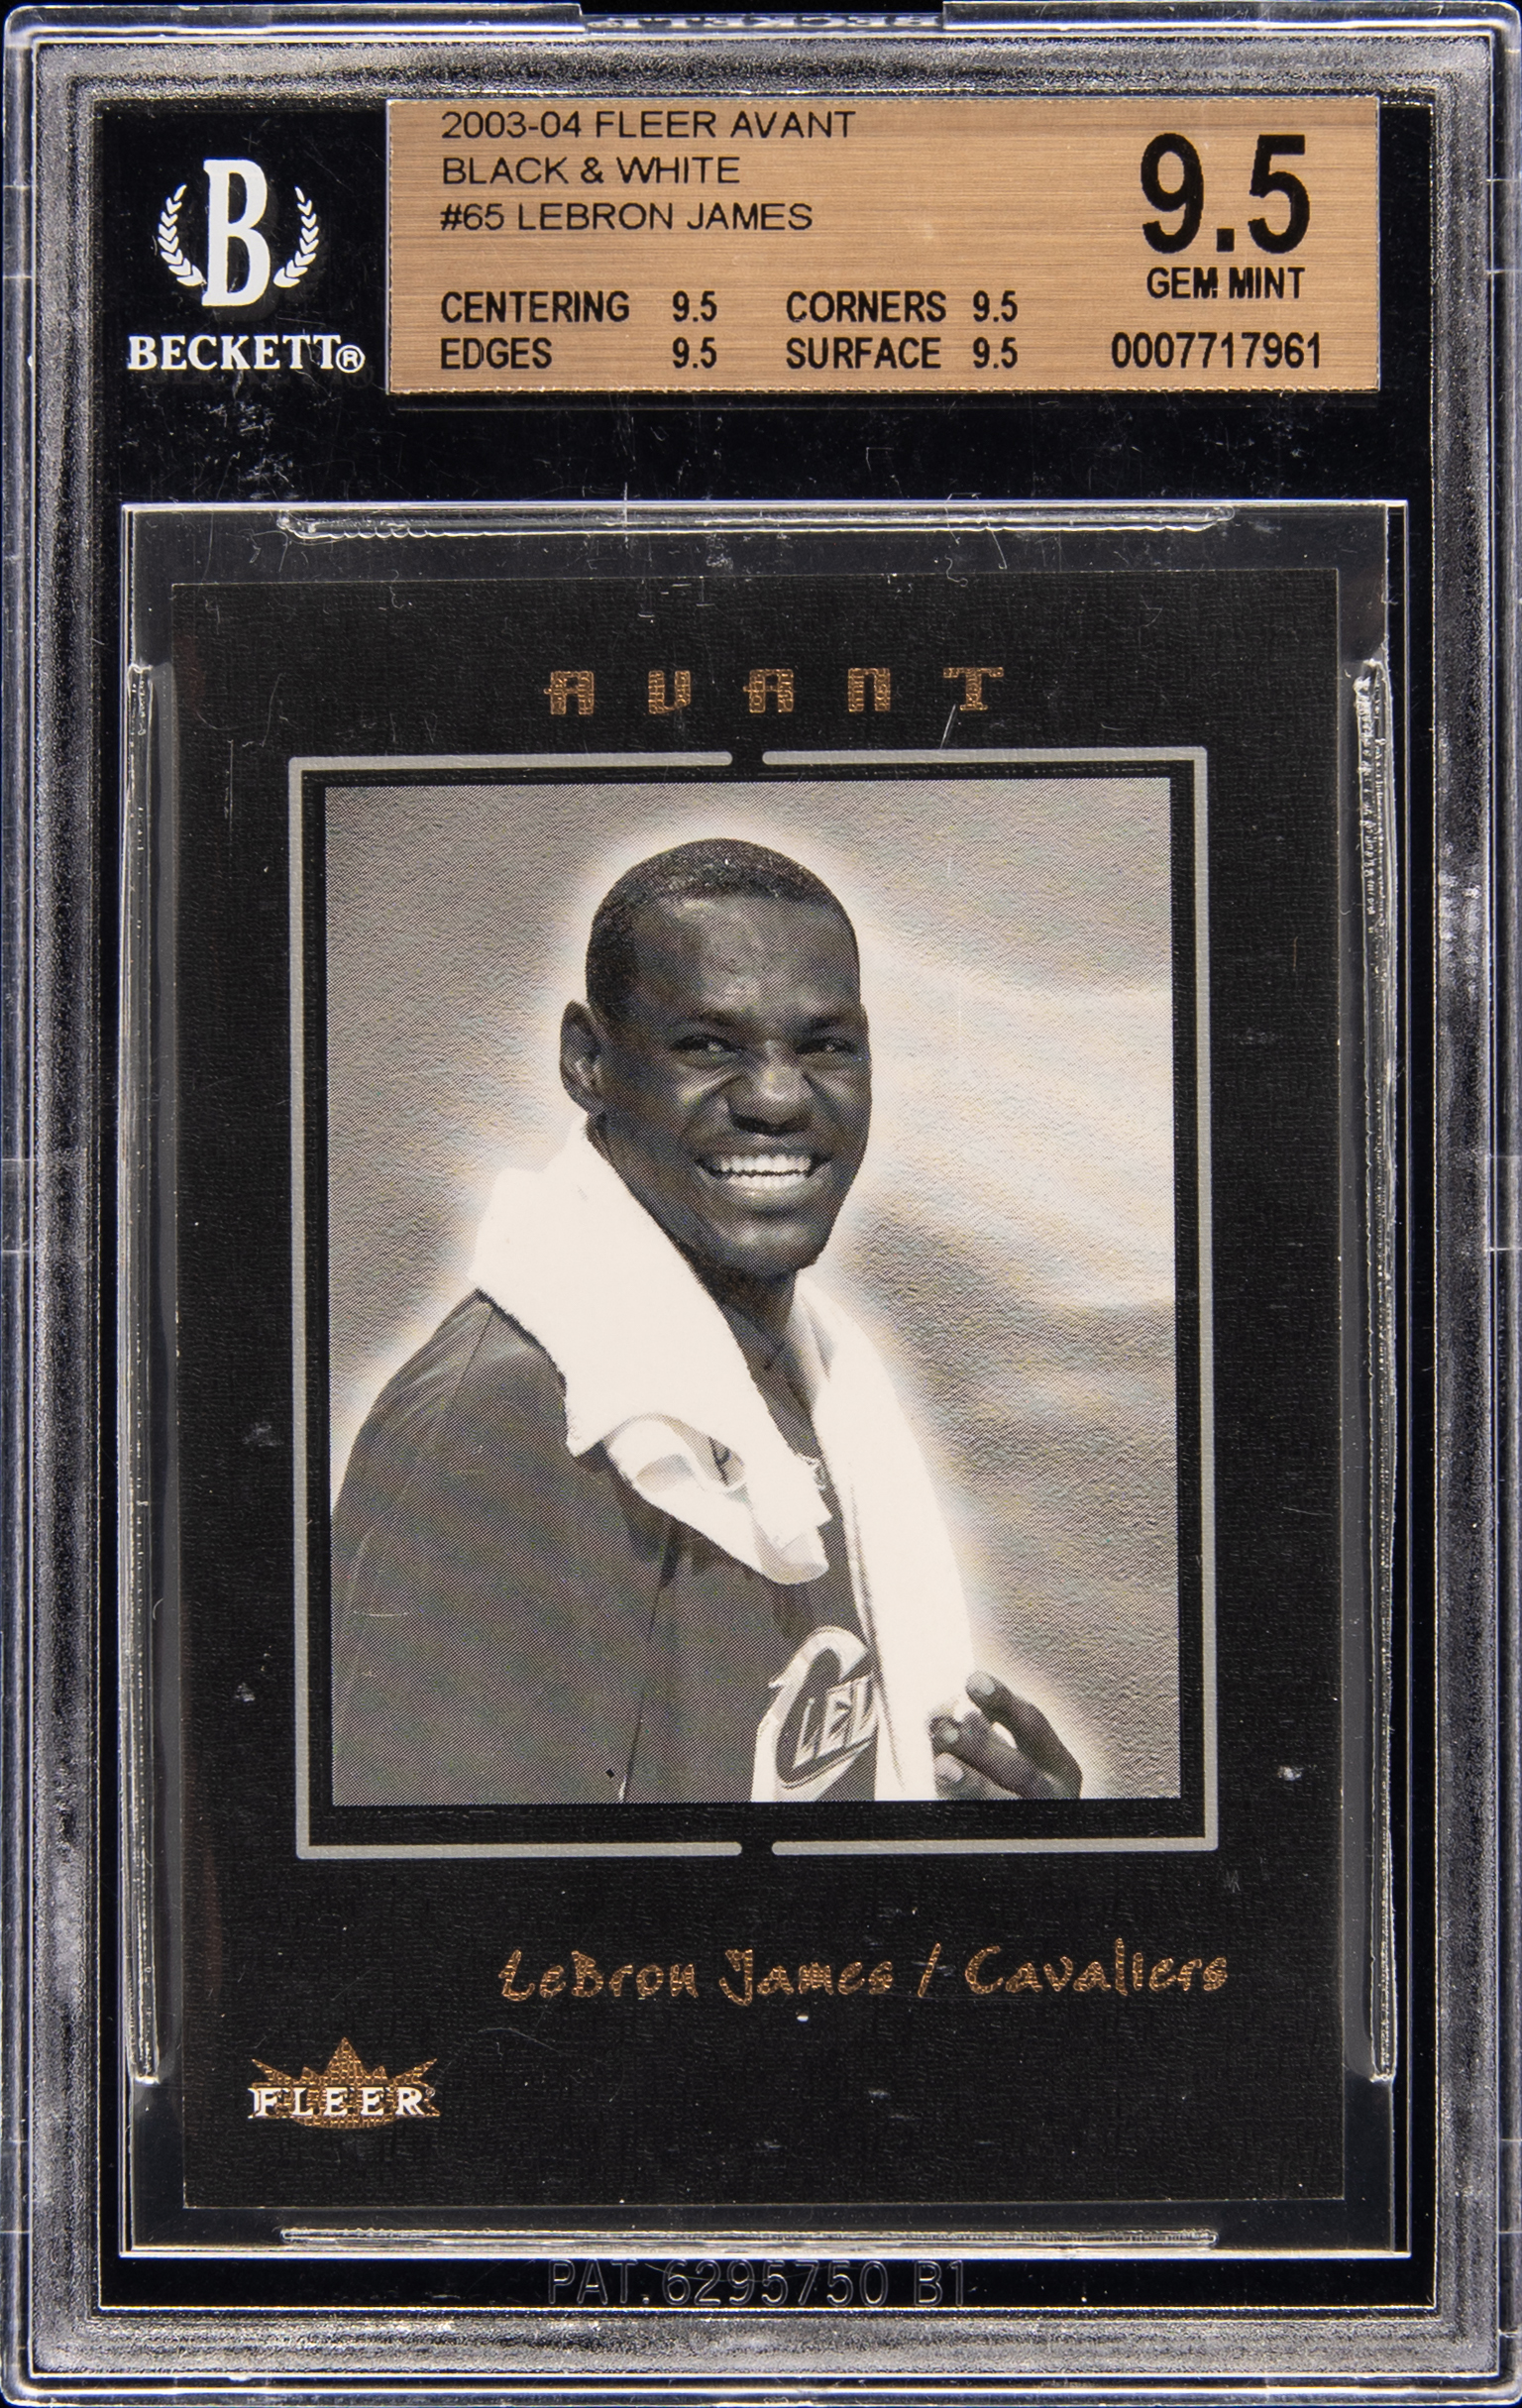 2003-04 Fleer Avant Black and White #65 LeBron James Rookie Card (#100/199) – BGS GEM MINT 9.5